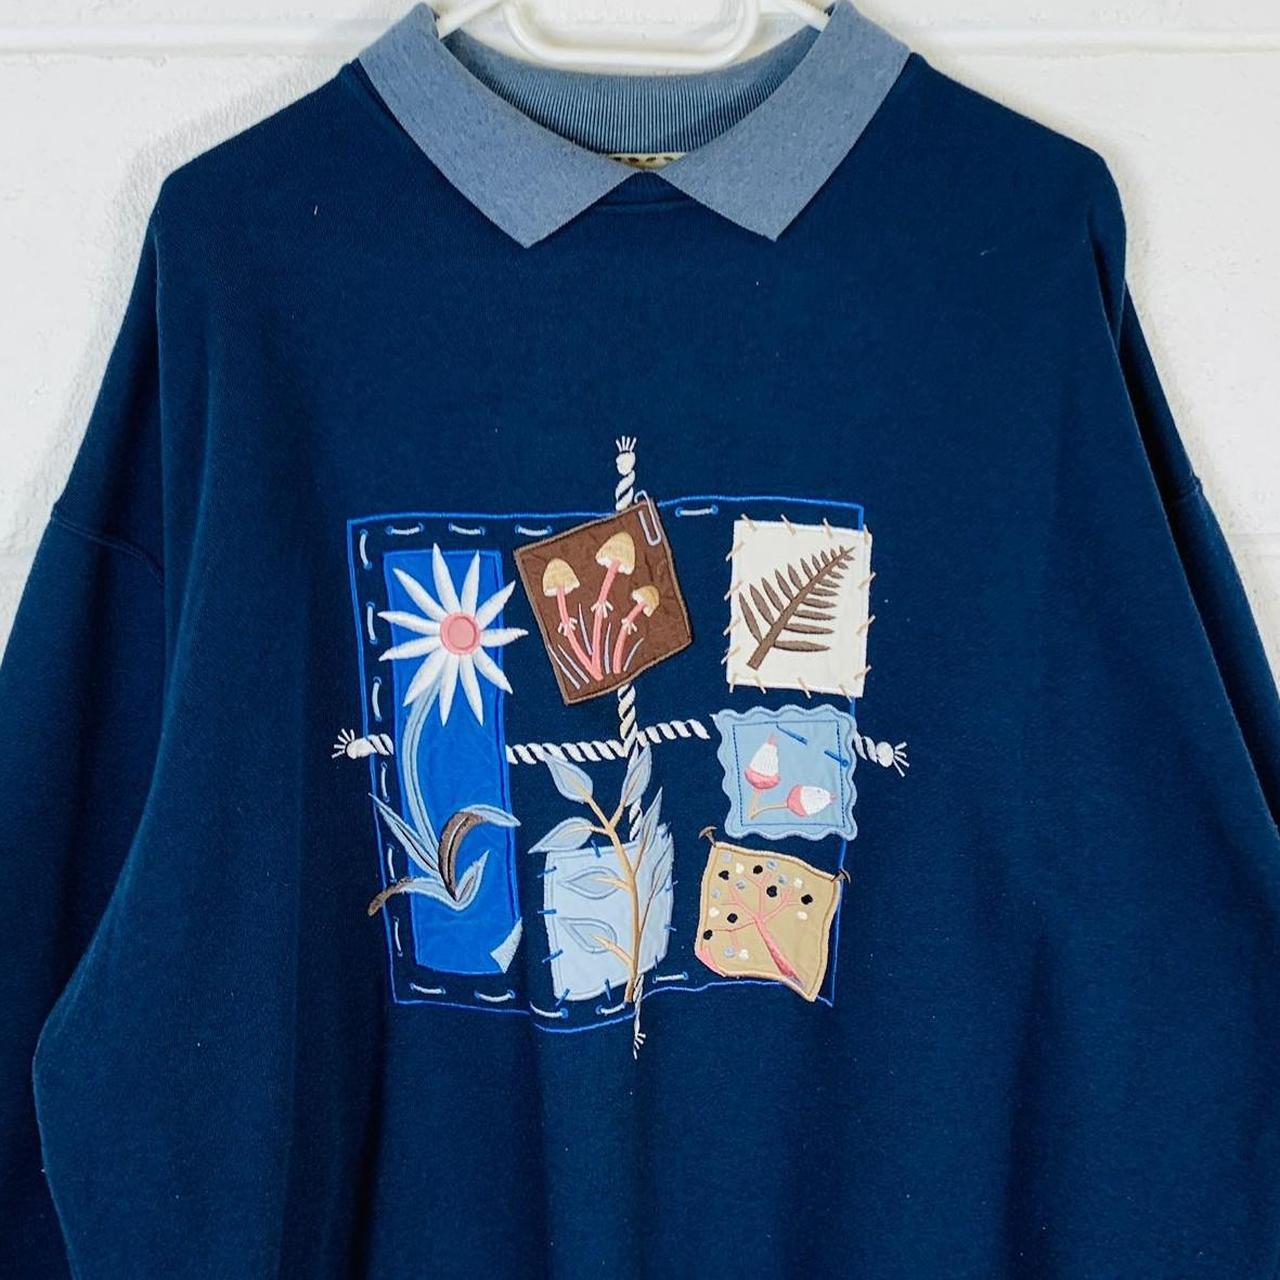 Product Image 1 - Vintage 90s Sweatshirt 

Blue with